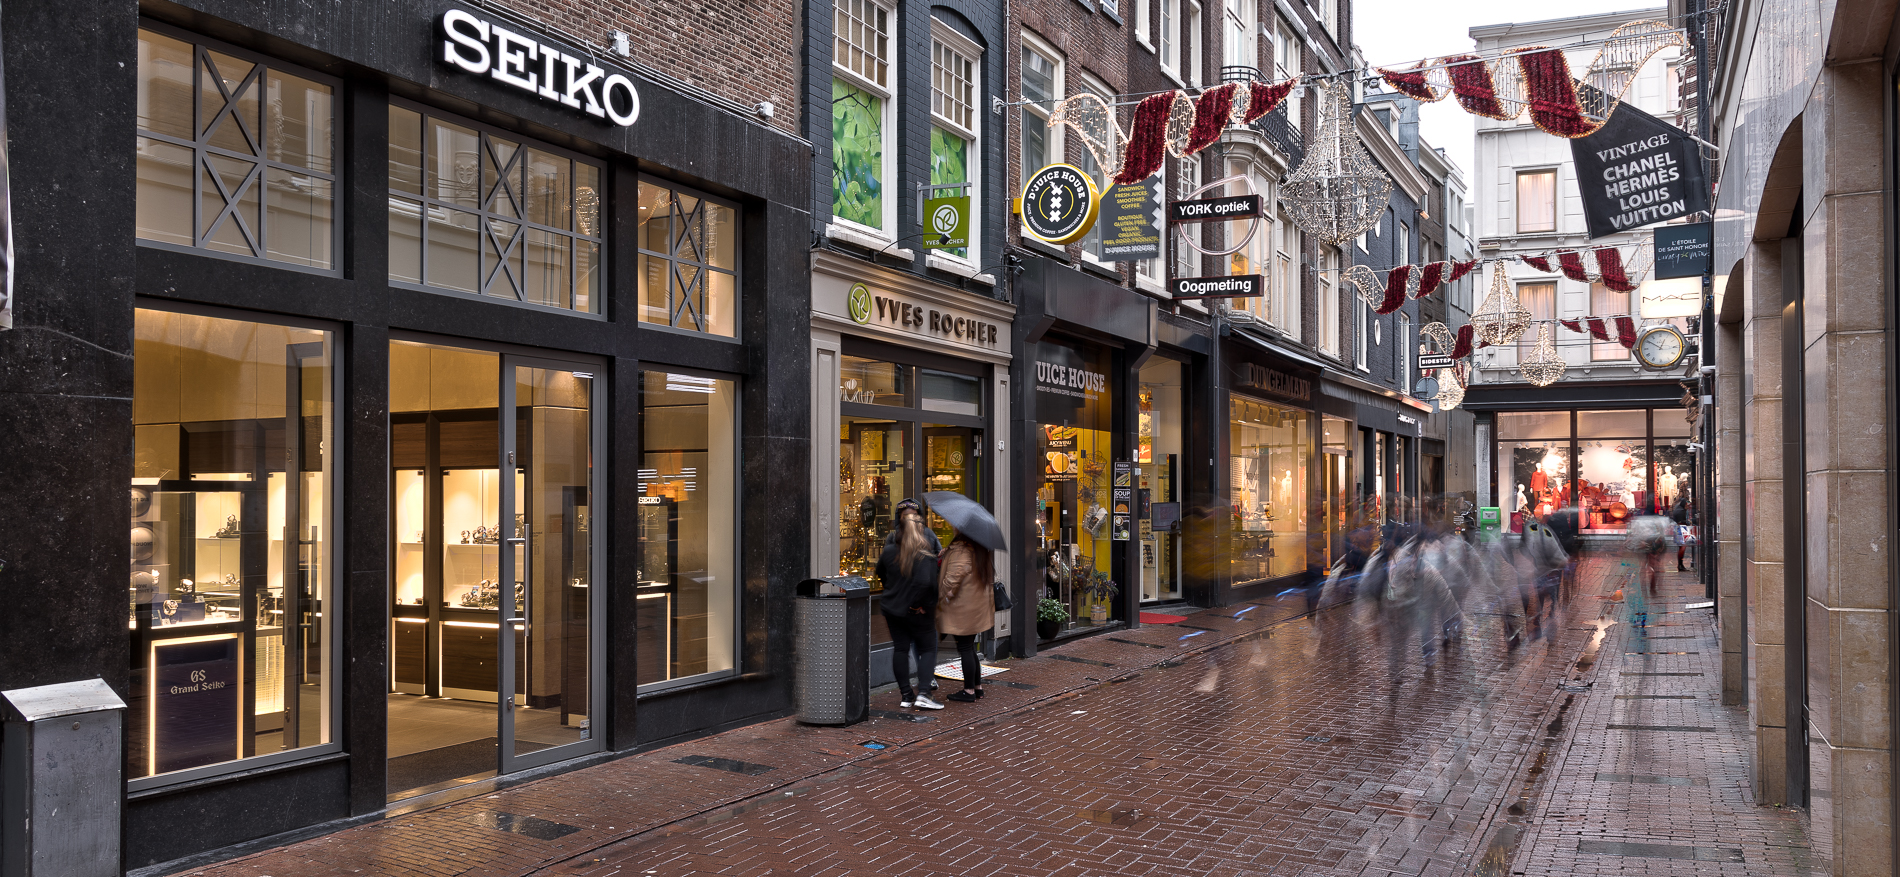 Seiko Brandstore | Amsterdam (NL) - Jeweler